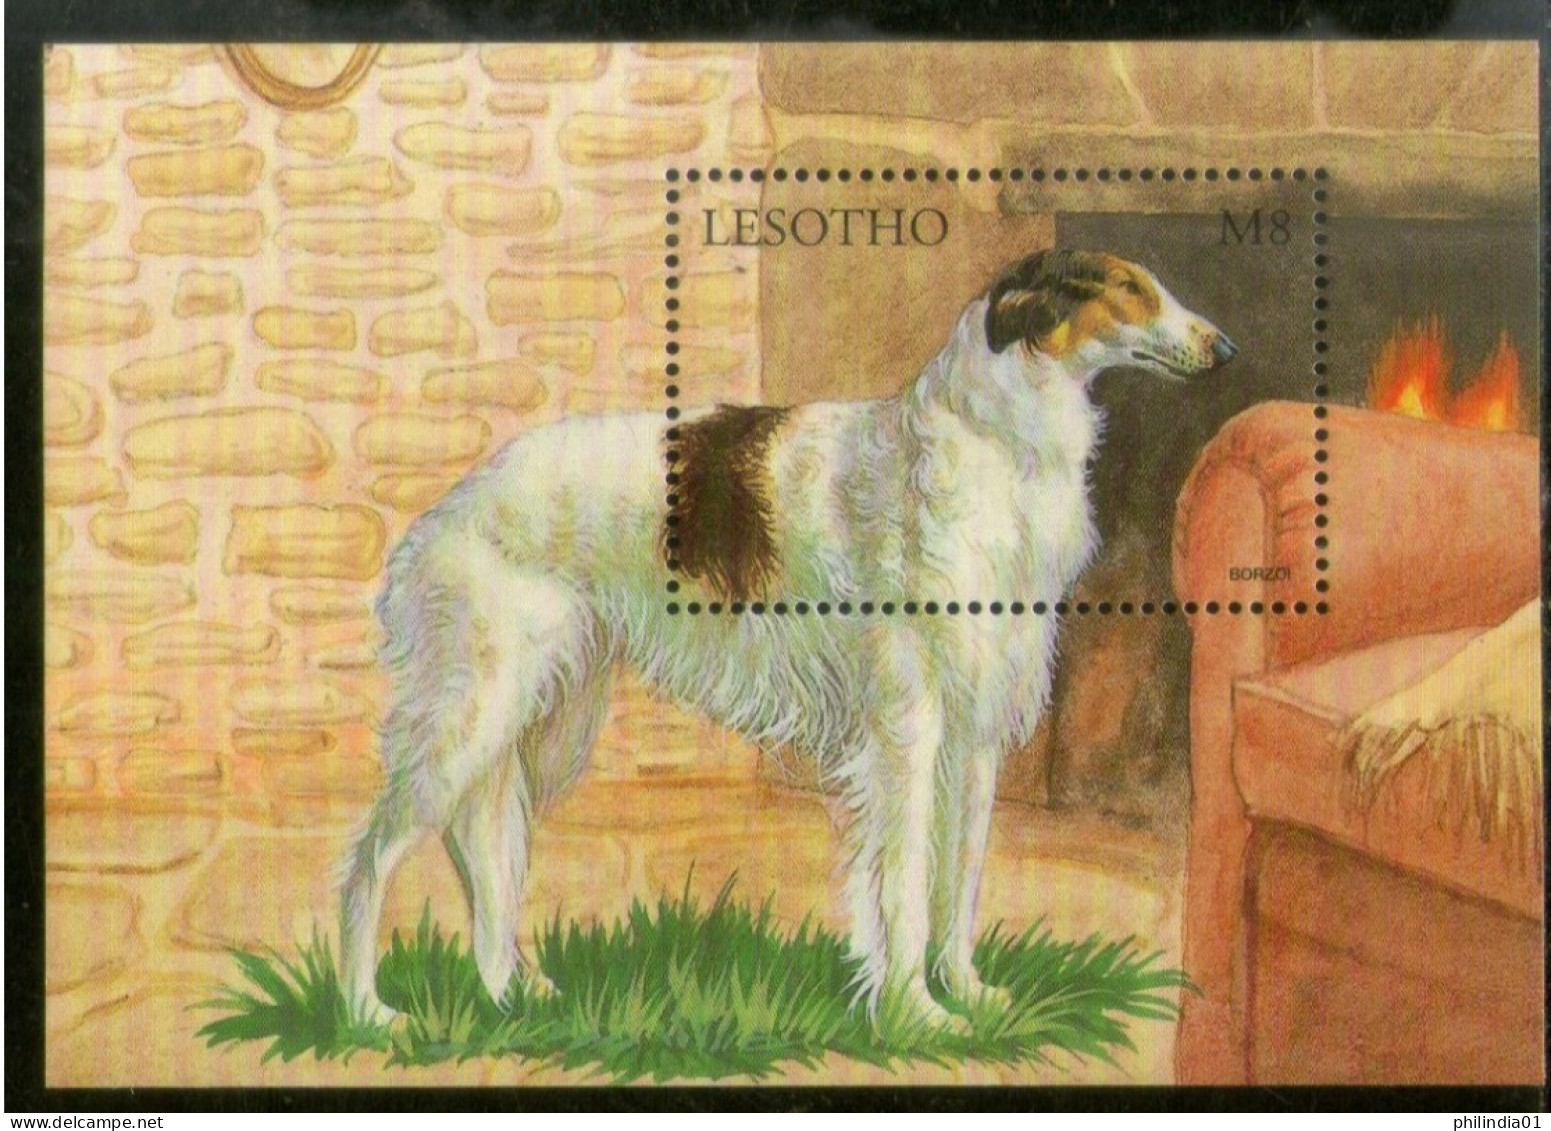 Lesotho 1999 Borzoi Dogs Of World Pet Animals Sc 1176 M/s MNH # 1942 - Dogs